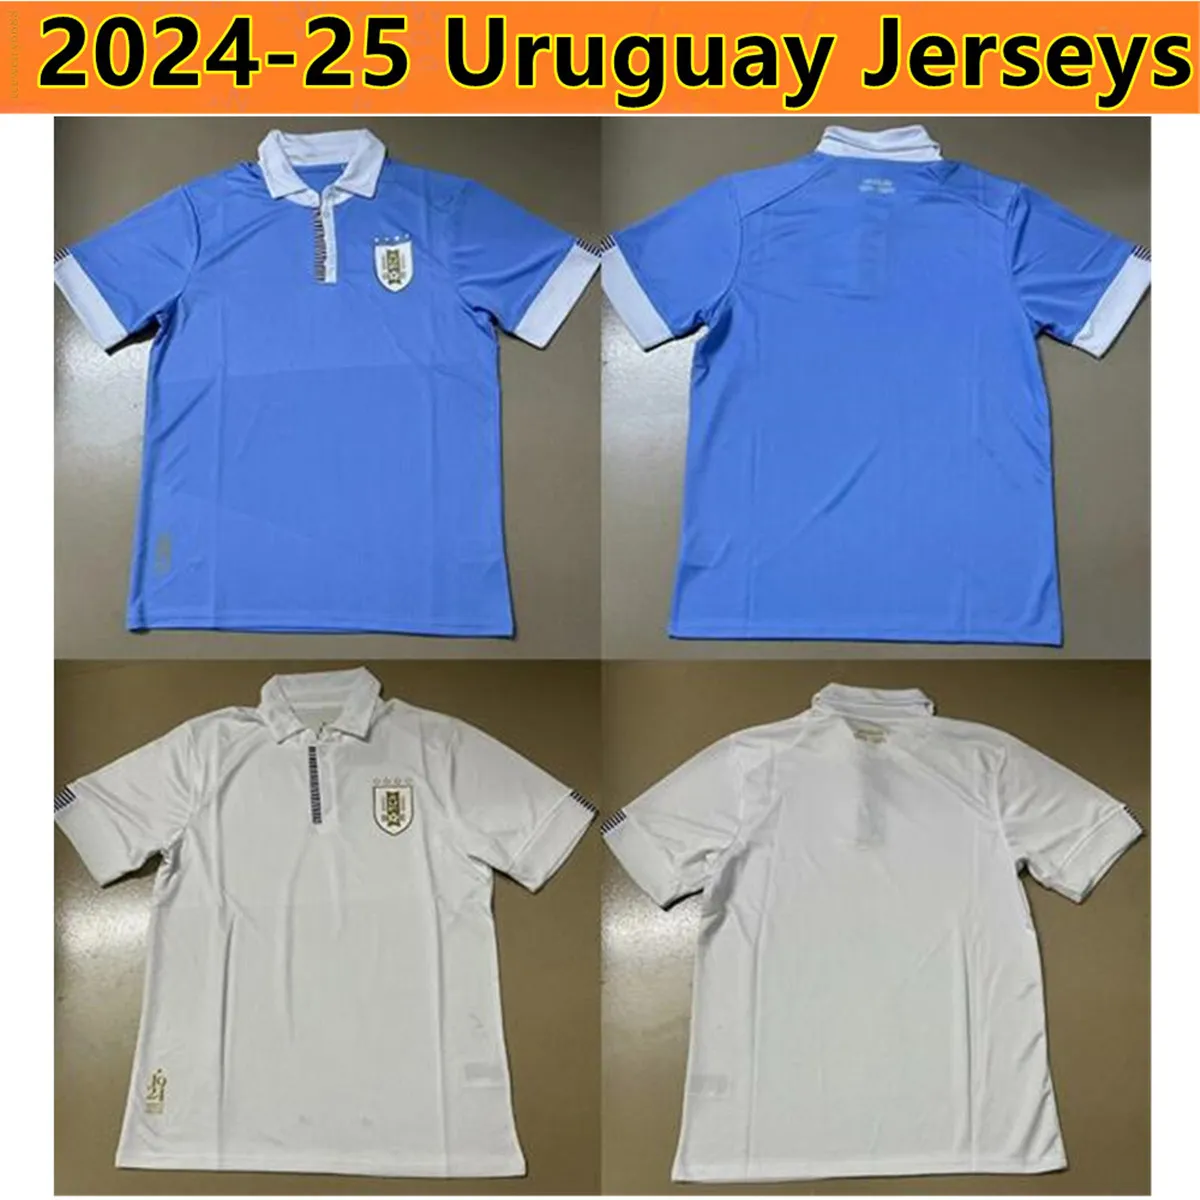 2024 Uruguay Soccer Jerseys Jubileum 100th Special L.Suarez E.Cavani N.De La Cruz In-House Shirt G.De Arrascaeta F.Valverde R.Bentancur R.ArAujo Football Shirts